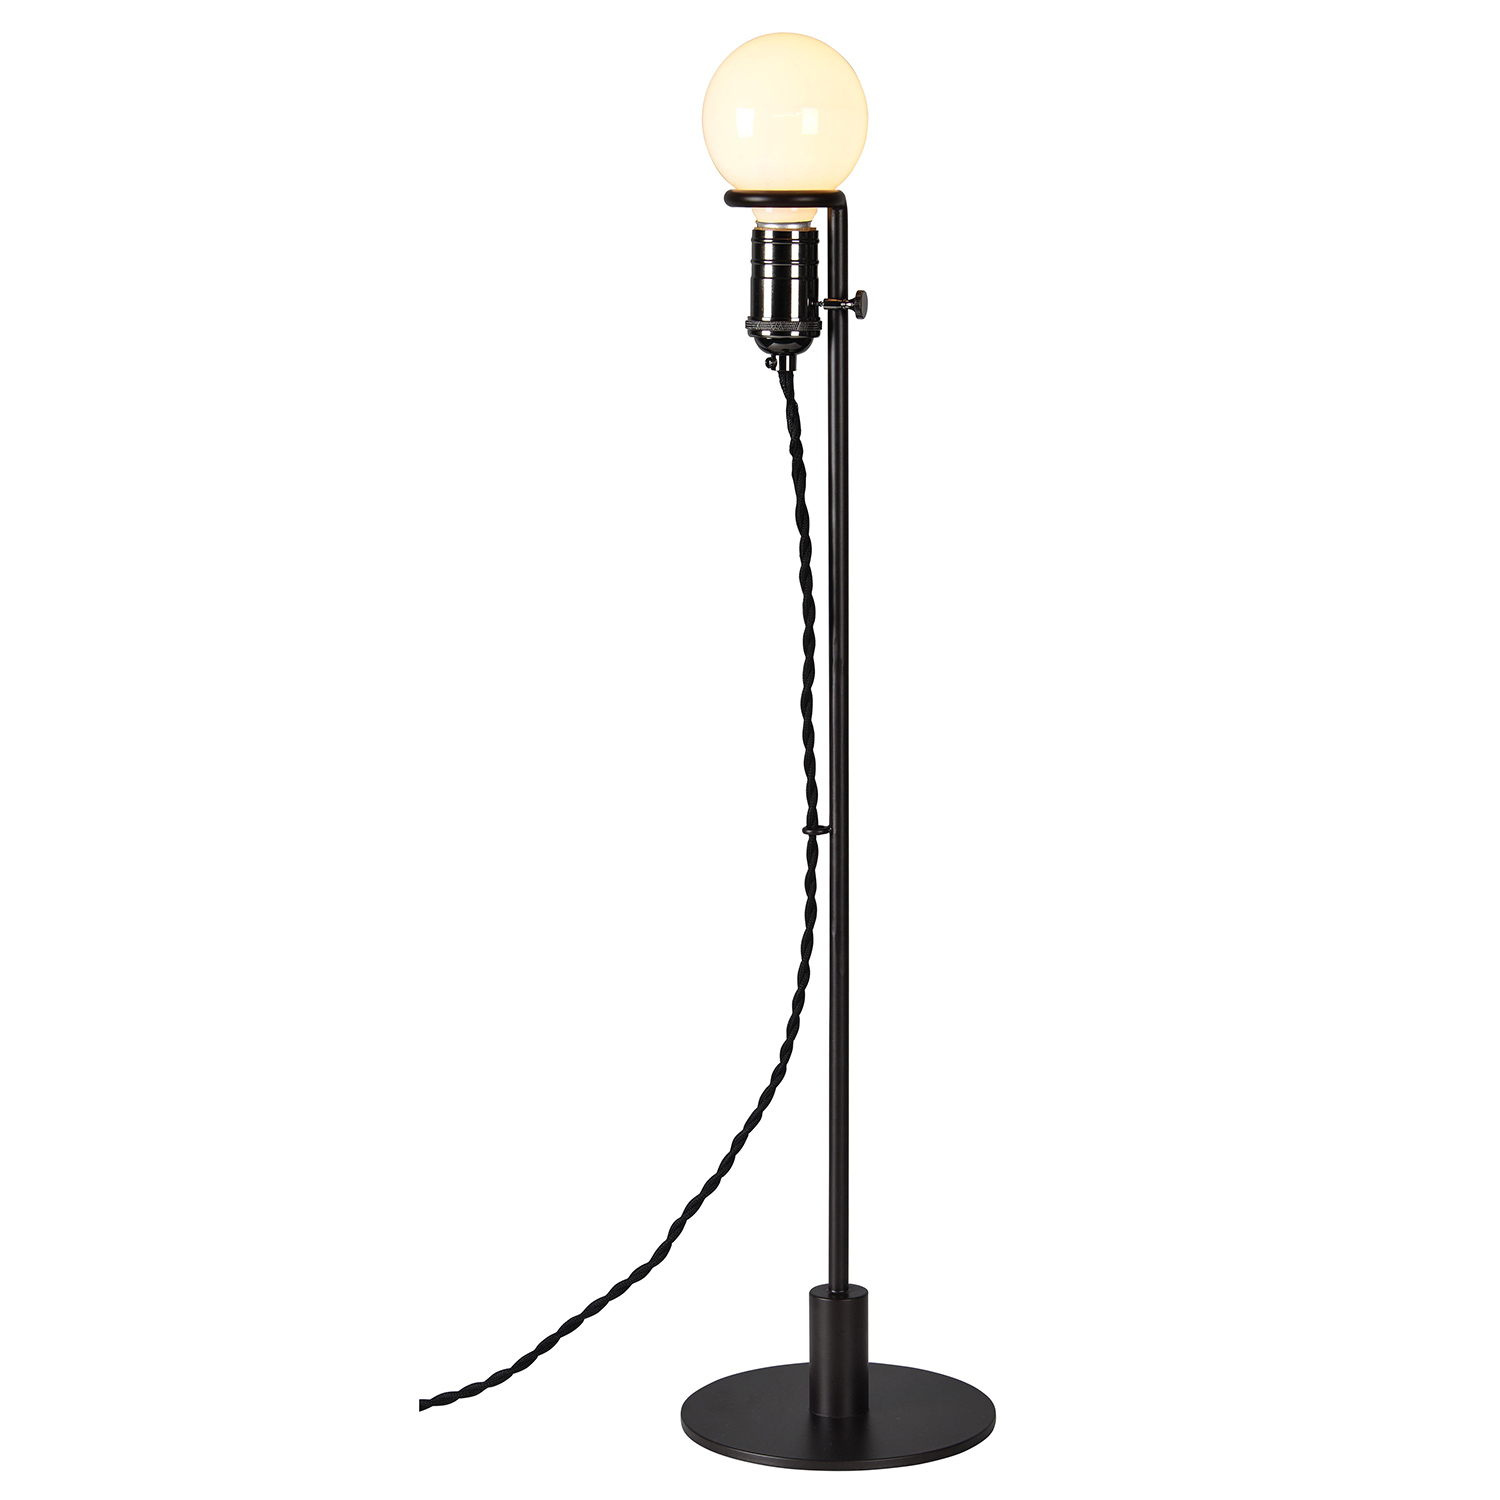 Ren-Wil Crane Table Lamp - Matte Black/AntiqueNickel